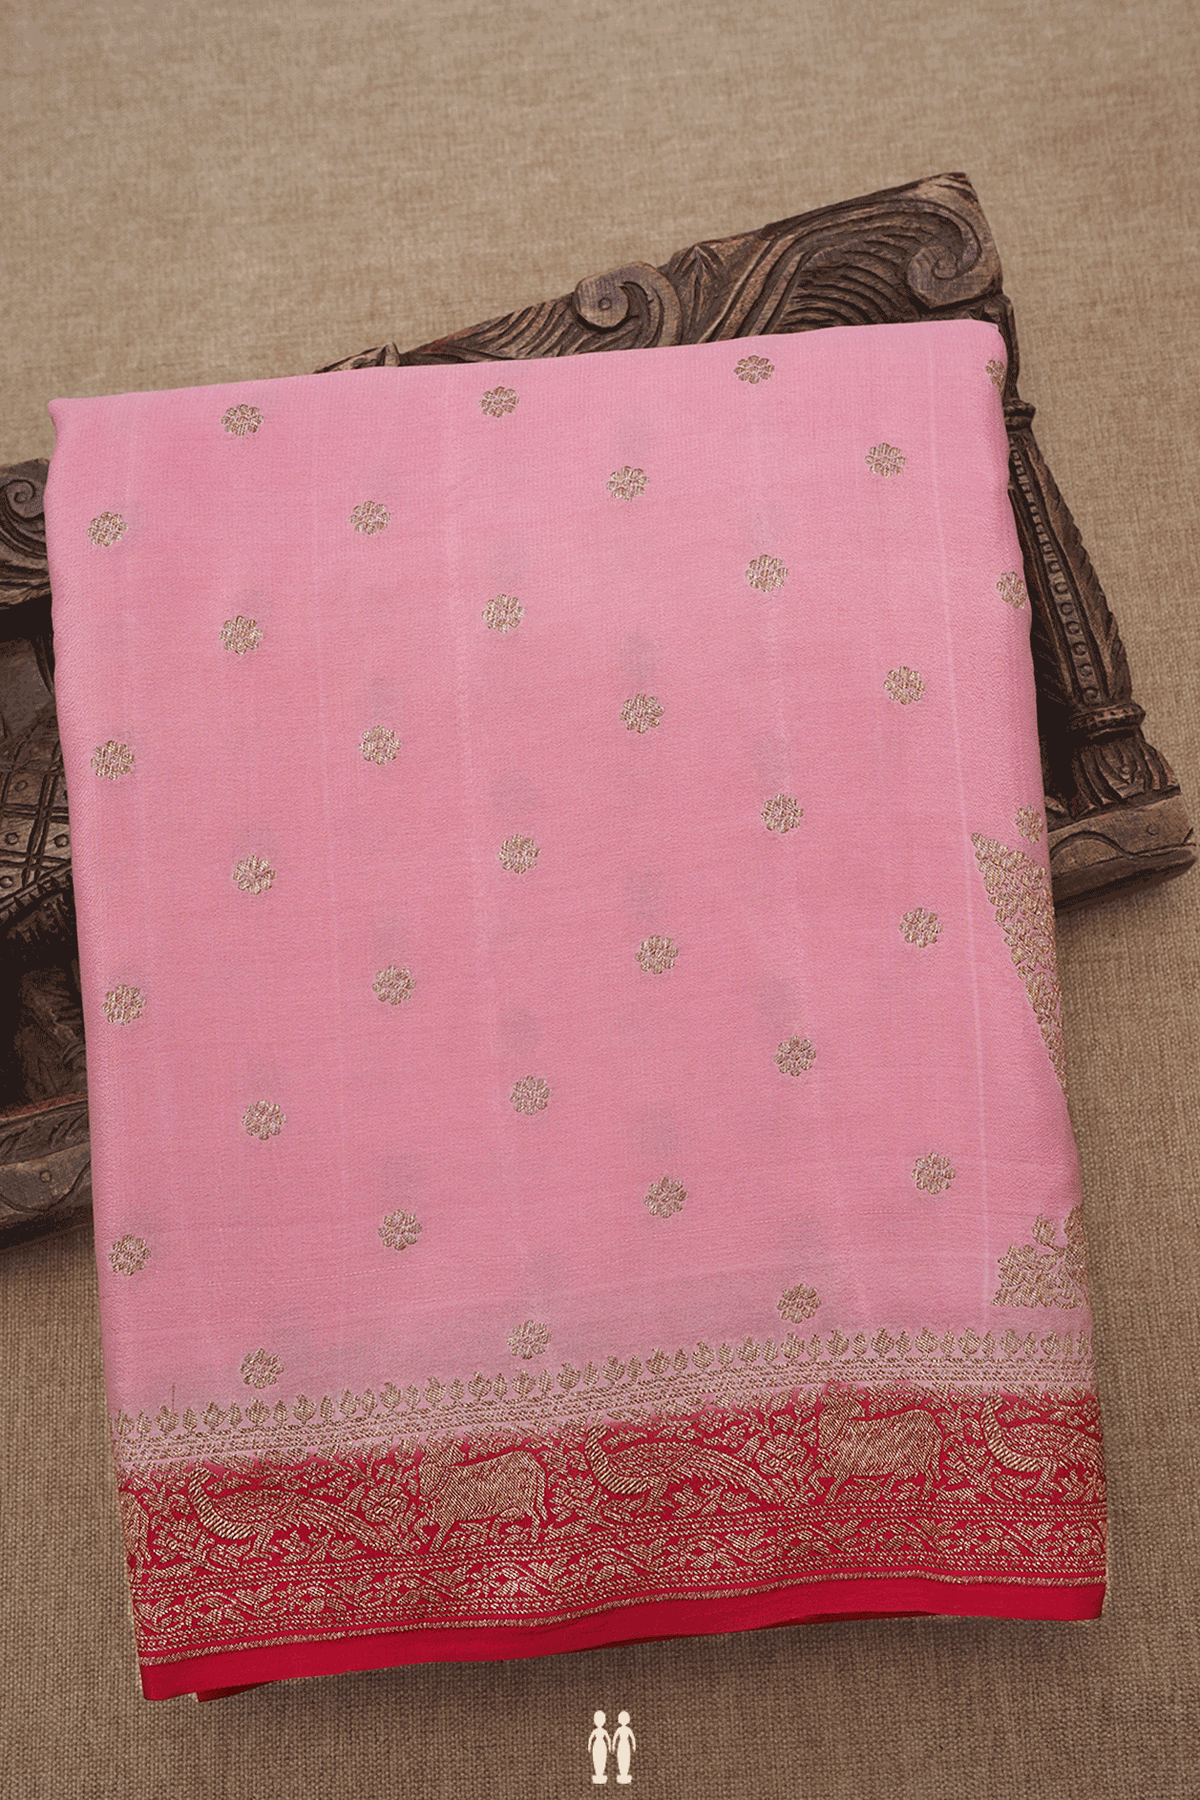 Floral Buttis Baby Pink Georgette Banarasi Silk Saree